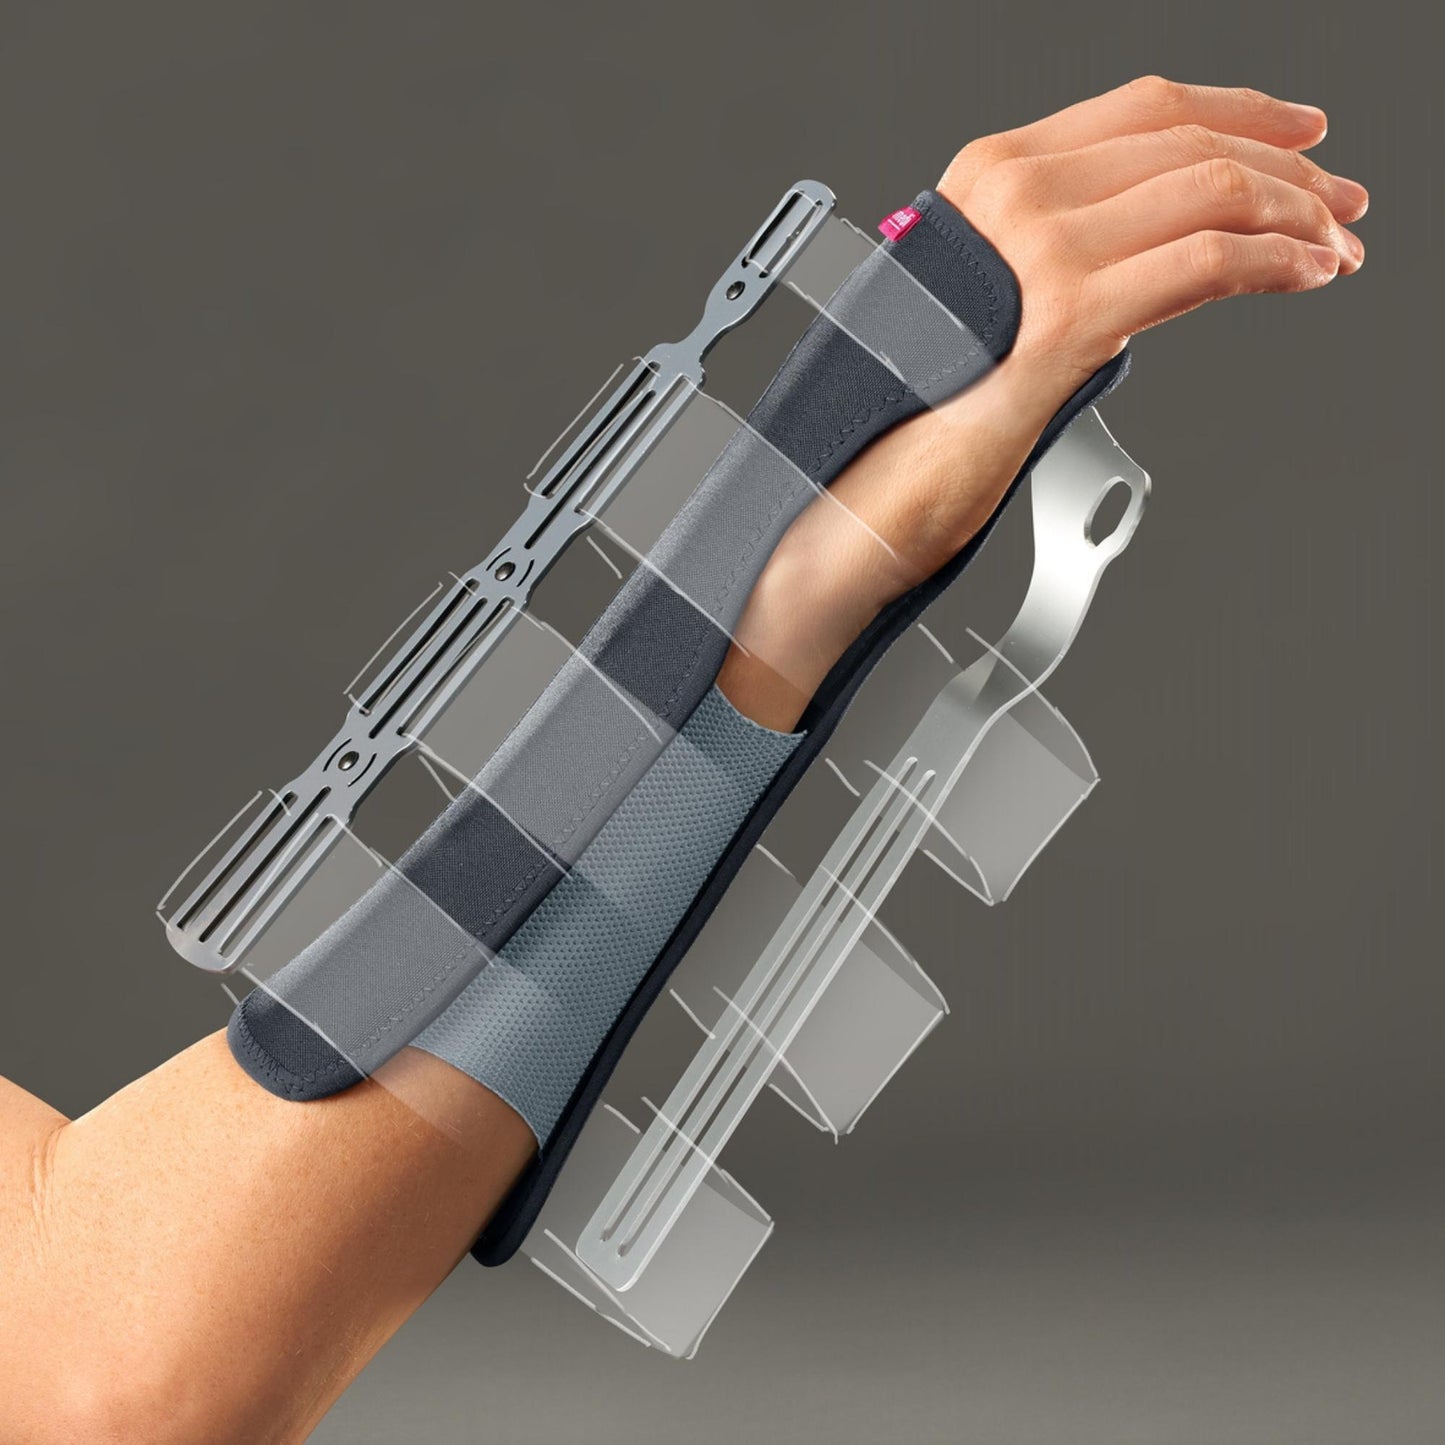 medi Manumed RFX Wrist Fracture Brace